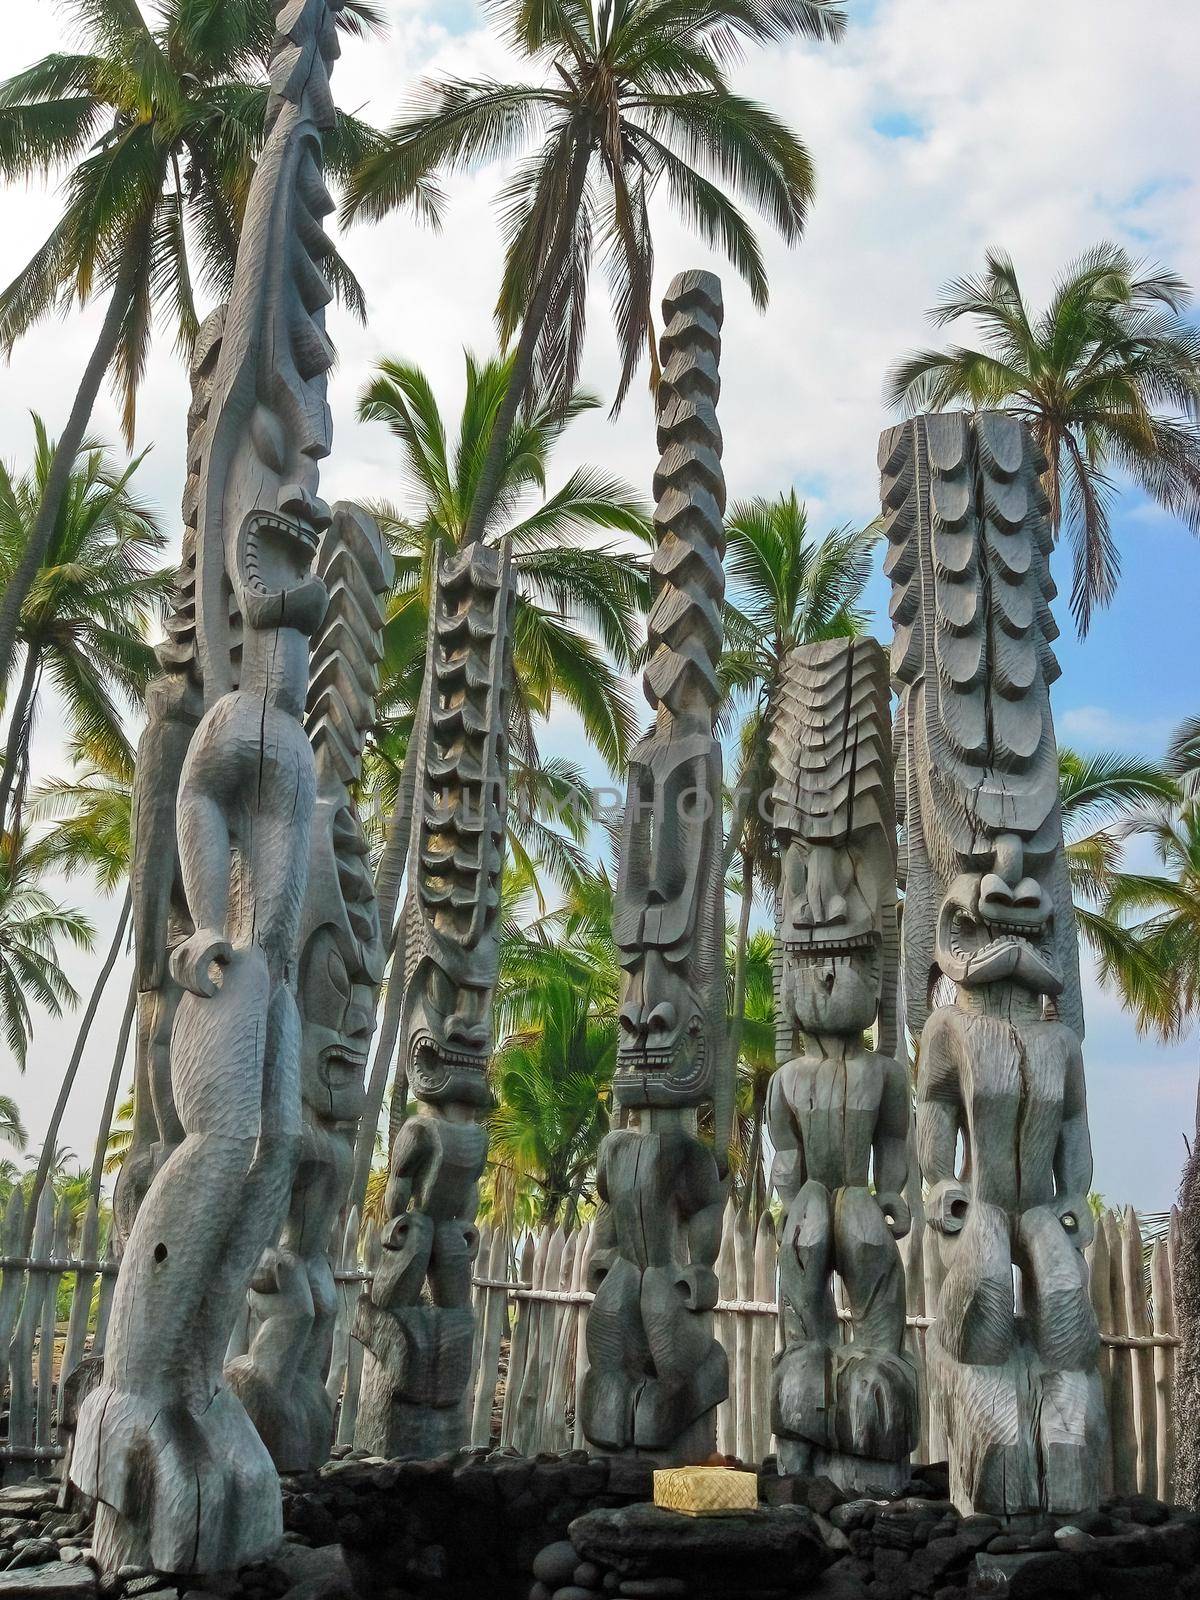 Wooden carvings resembling Hawaiian gods, Kii, at Puuhonua o Honaunau National Historical Park by markvandam